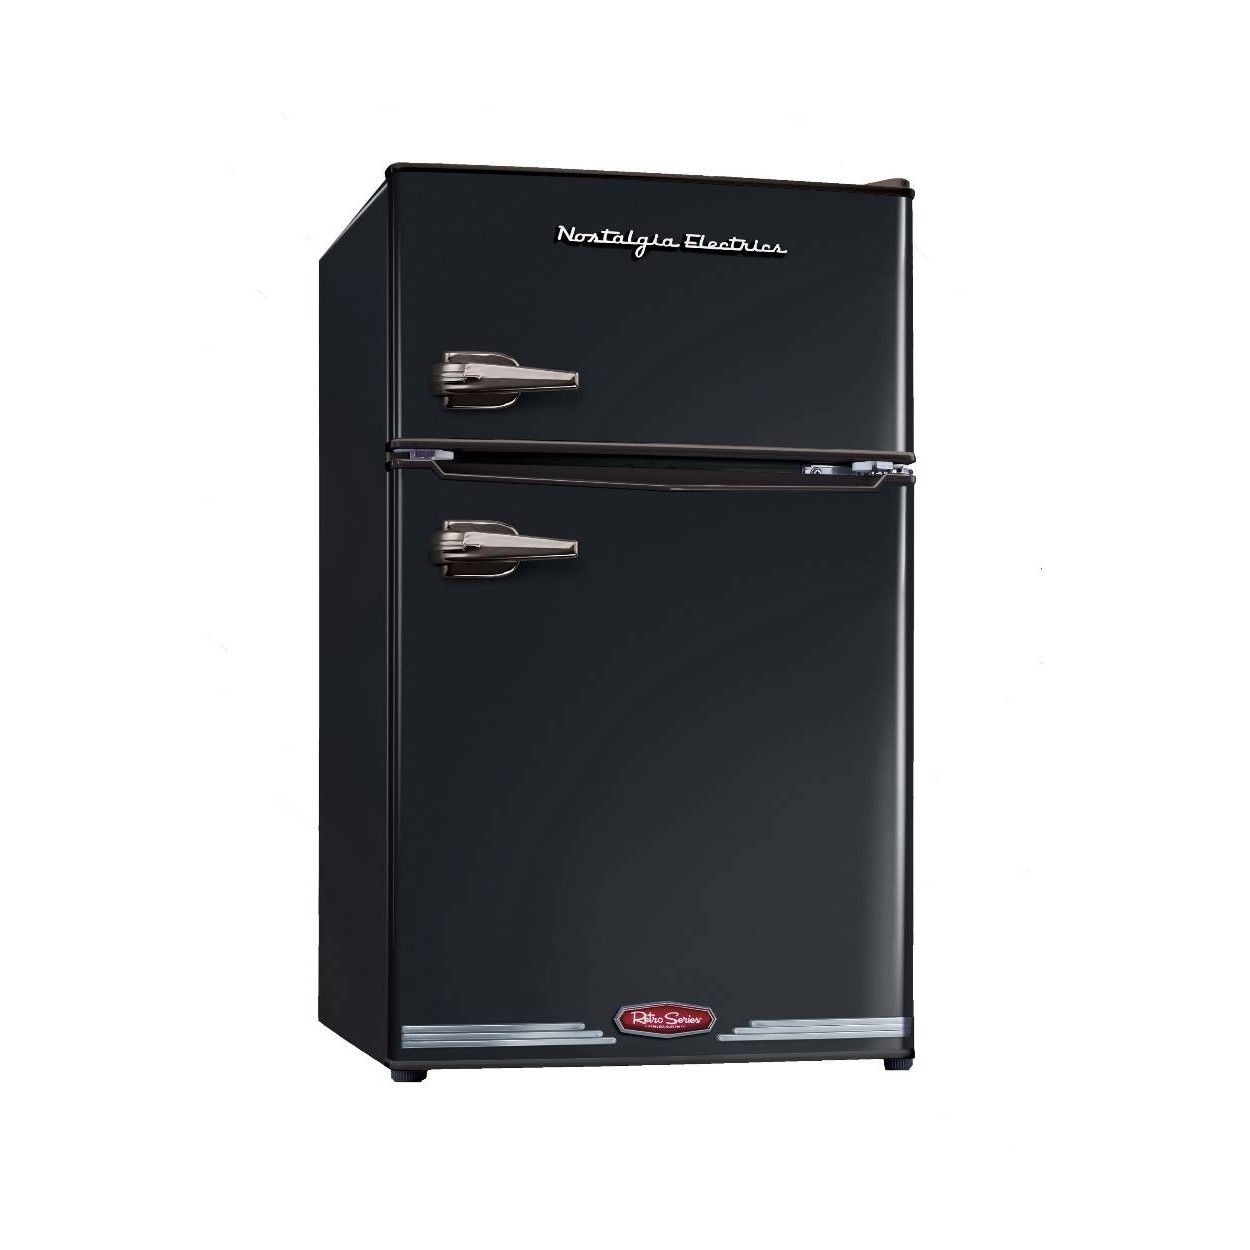 Retro Series 3.1 cu. ft. Freestanding Compact Refrigerator with Freezer